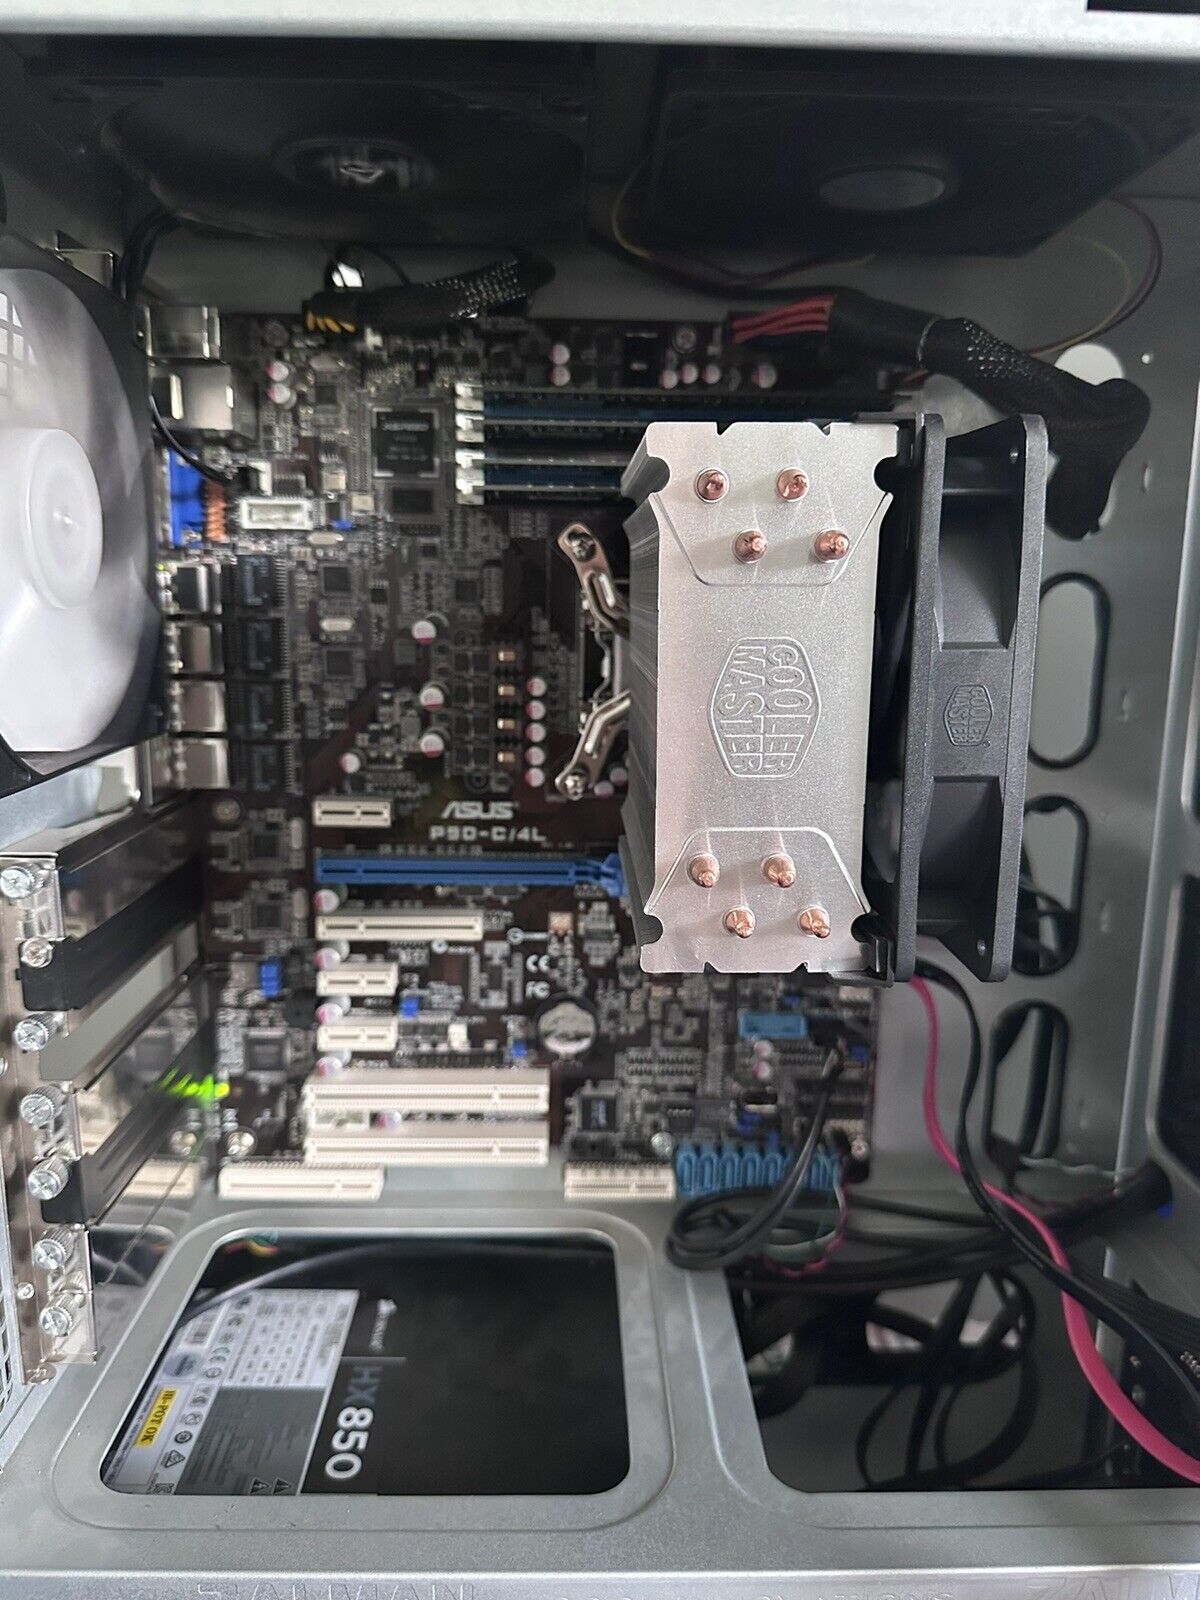 Asus P9D-C/4L Server Motherboard